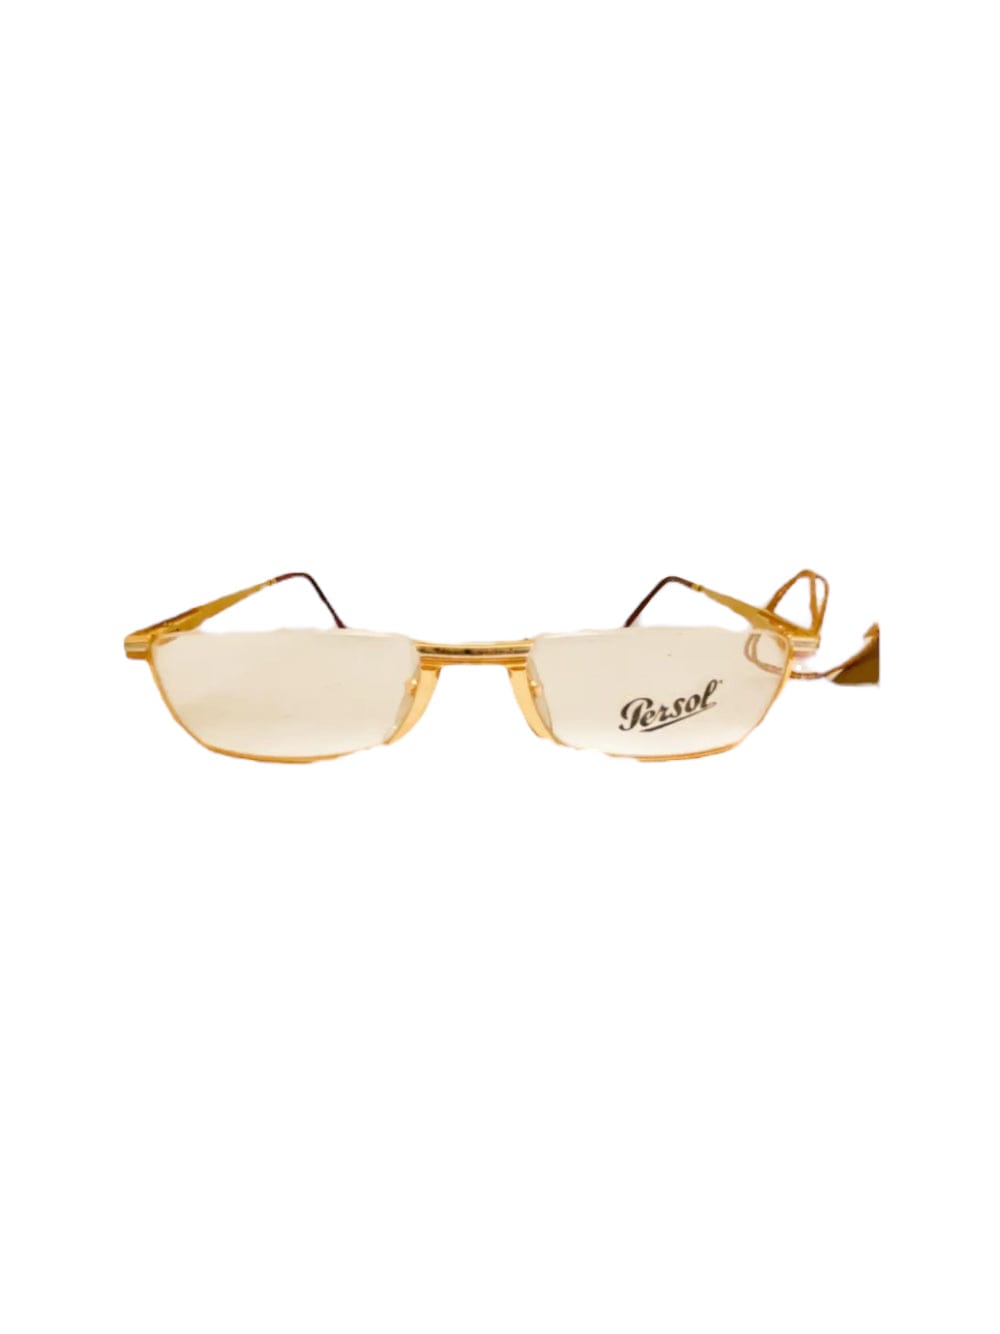 Lancester - Gold Sunglasses